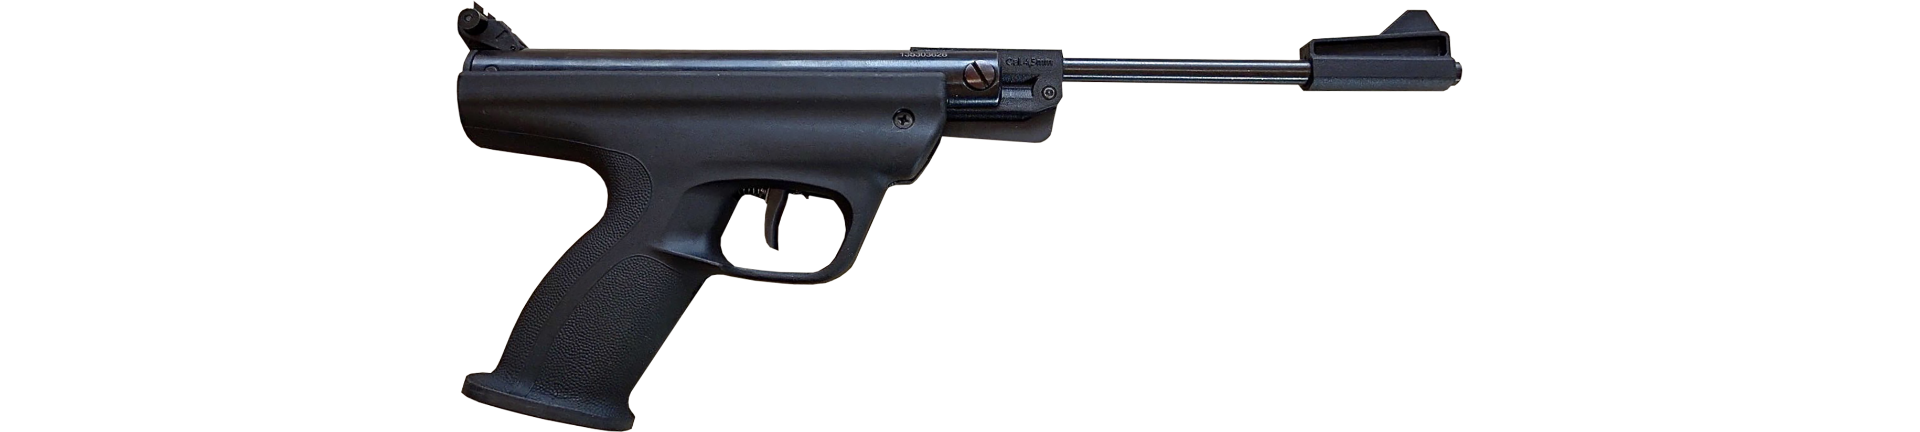 Пистолет пневматический MP - 53M кал. 4.5